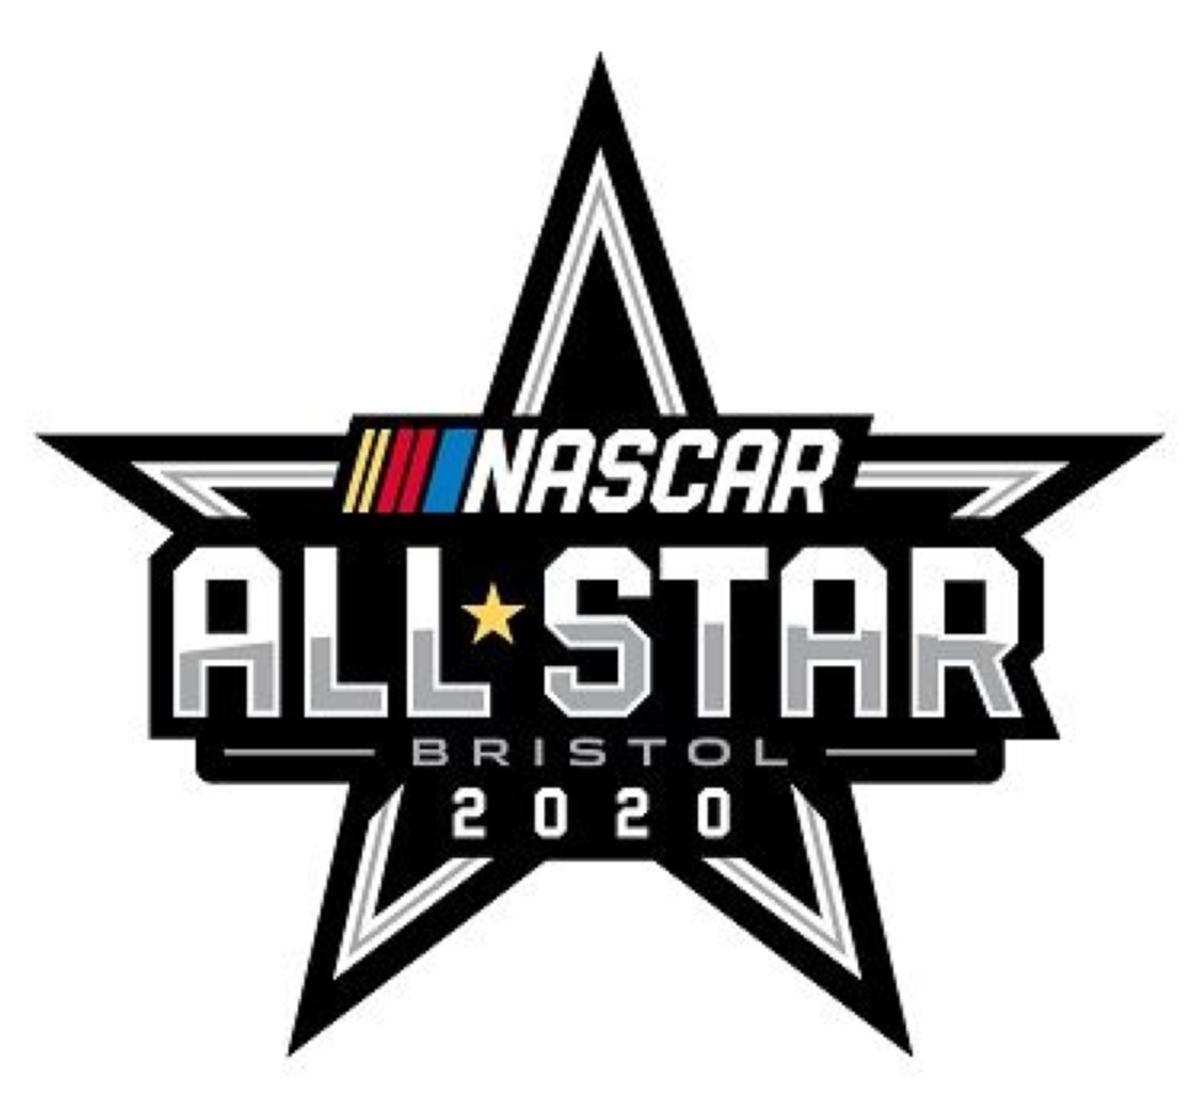 NASCAR All-Star Race from Bristol Motor Speedway